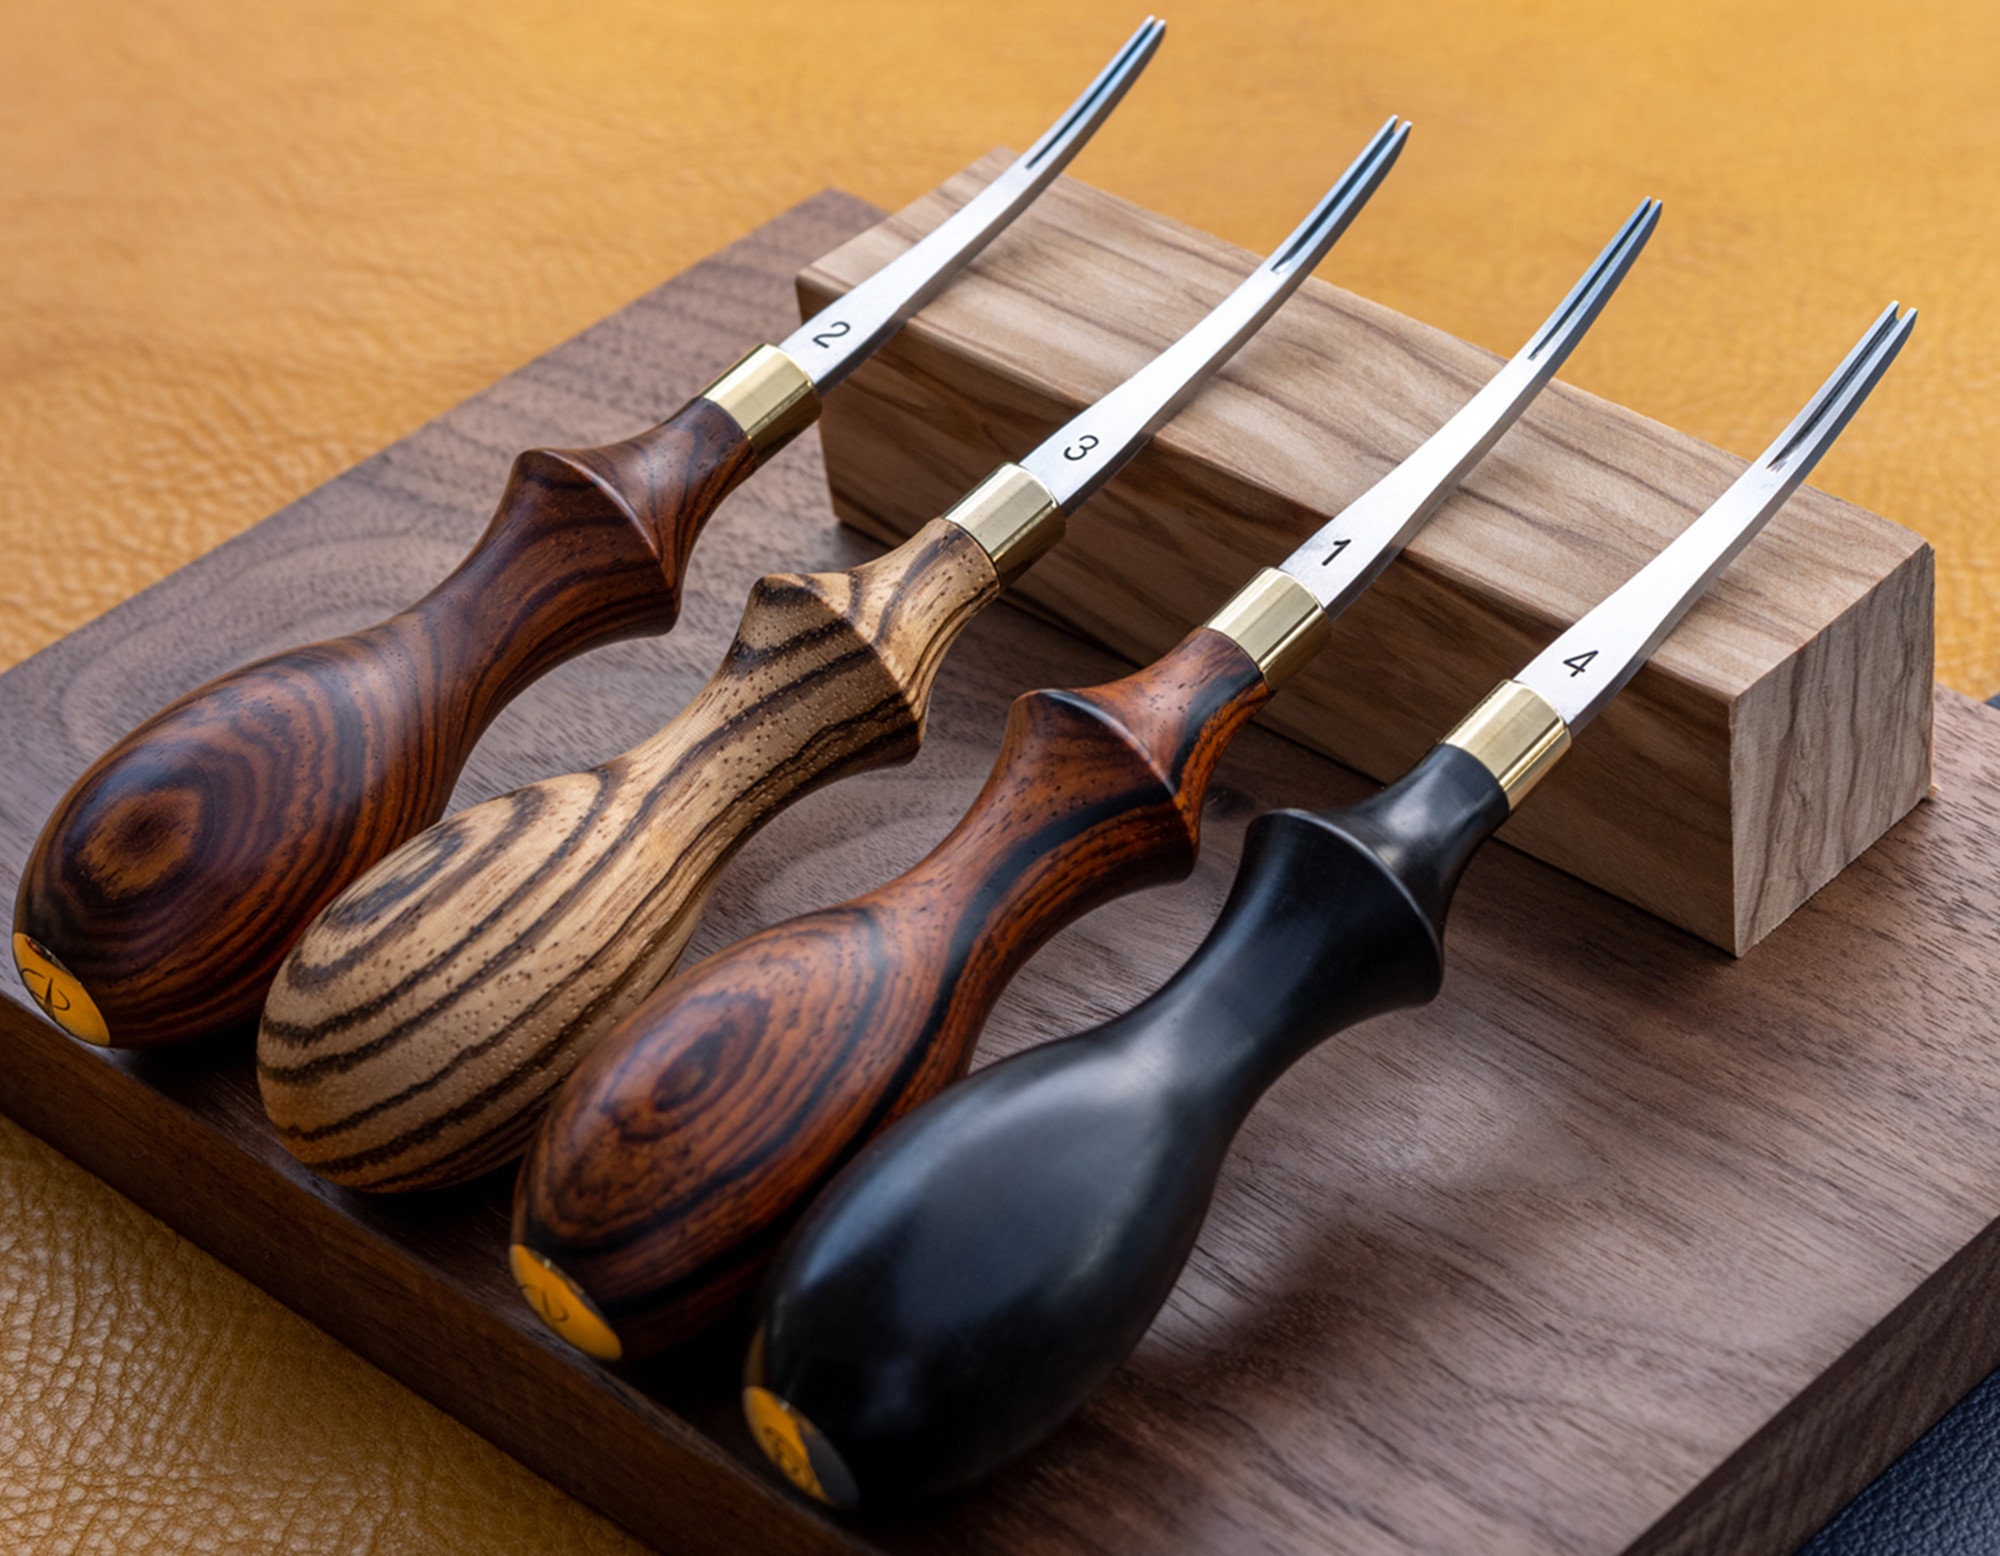 Oakadoaks Chisel Set Woodworking Tools & Wood Carving Tools High Quality  Chrome Vanadium Steel Wood Chisel Sets / Beveled Edges set of 4 -   Canada